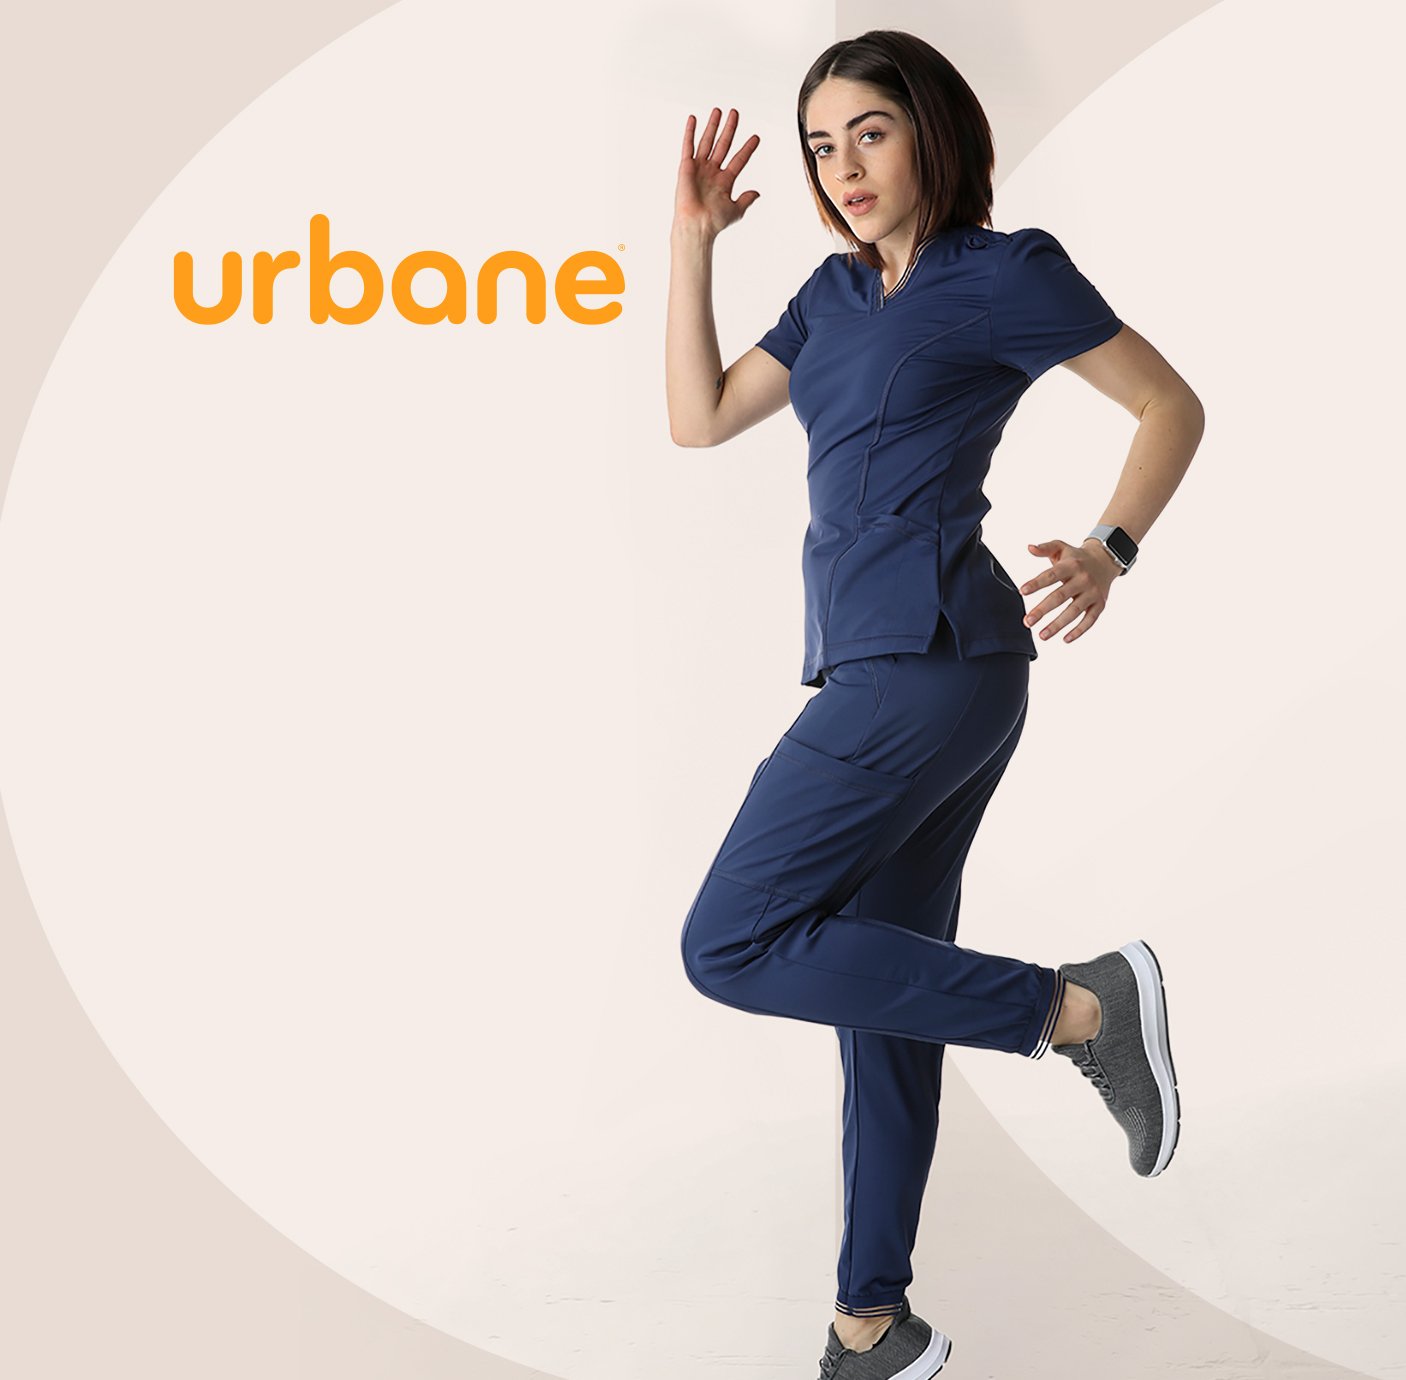 Urbane Scrubs - Quality Scrub Tops, Pants & Medical Uniforms